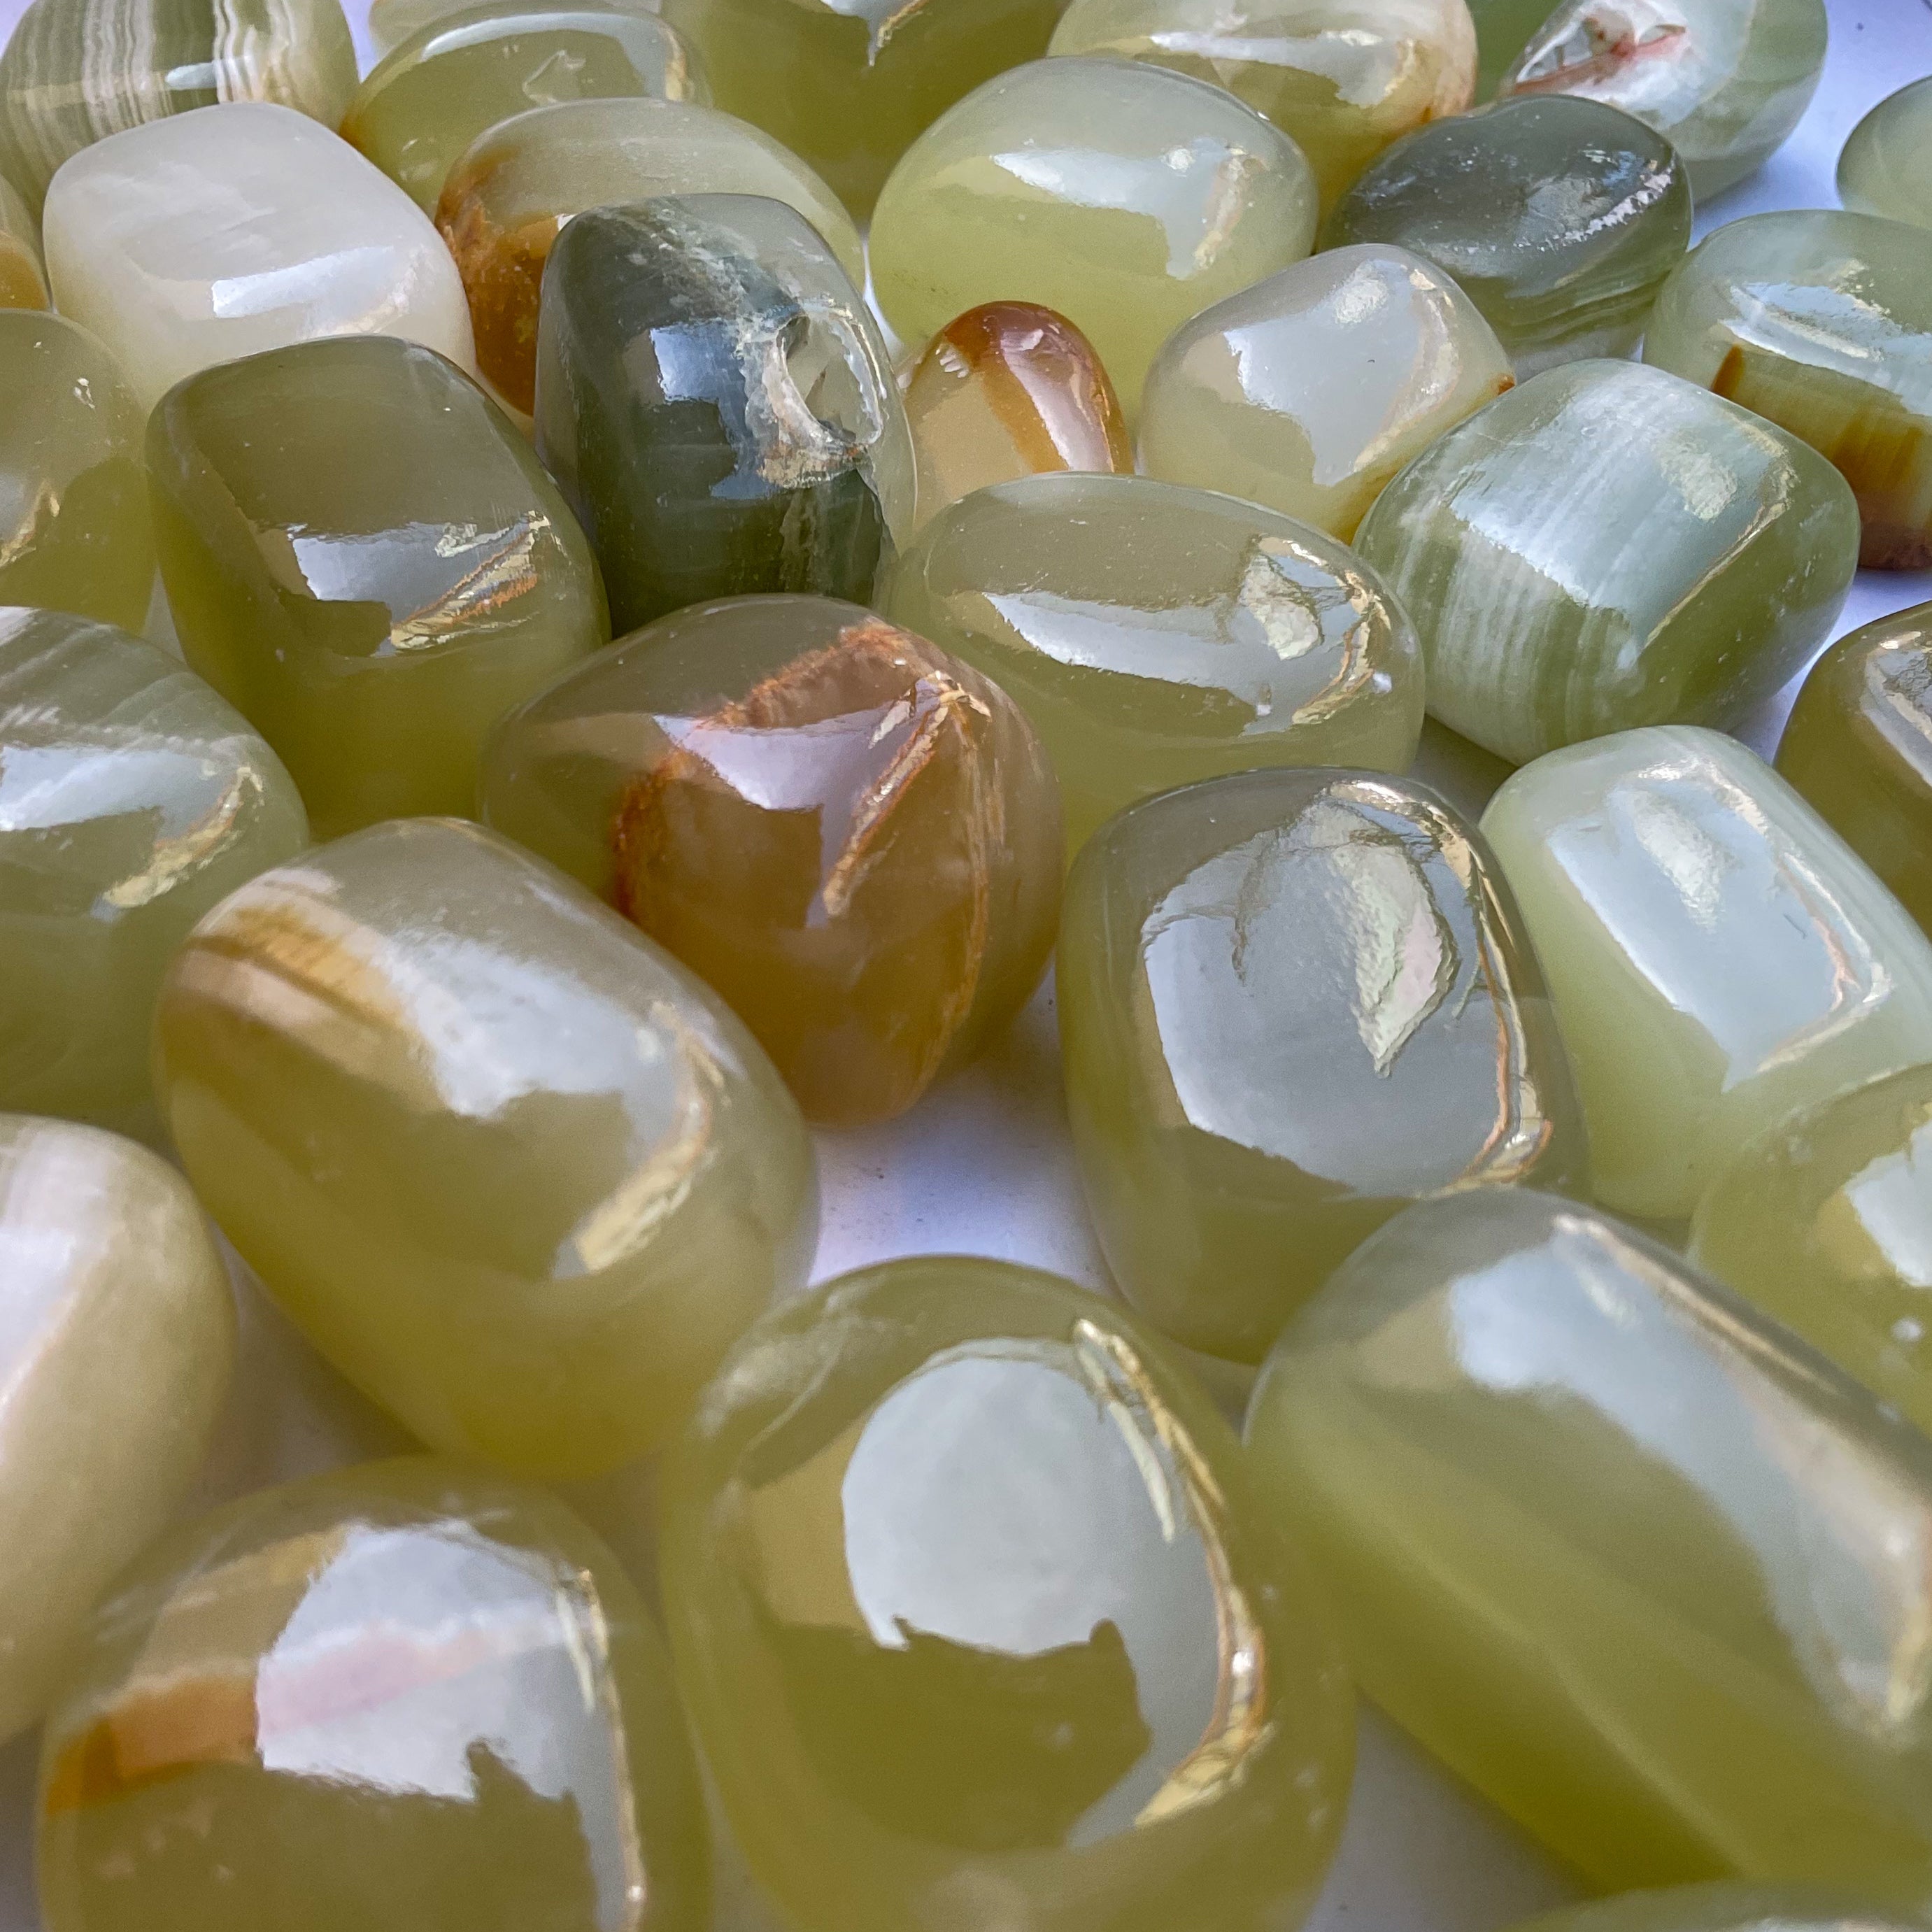 Wholesale tumbled stones bulk lot in green onyx